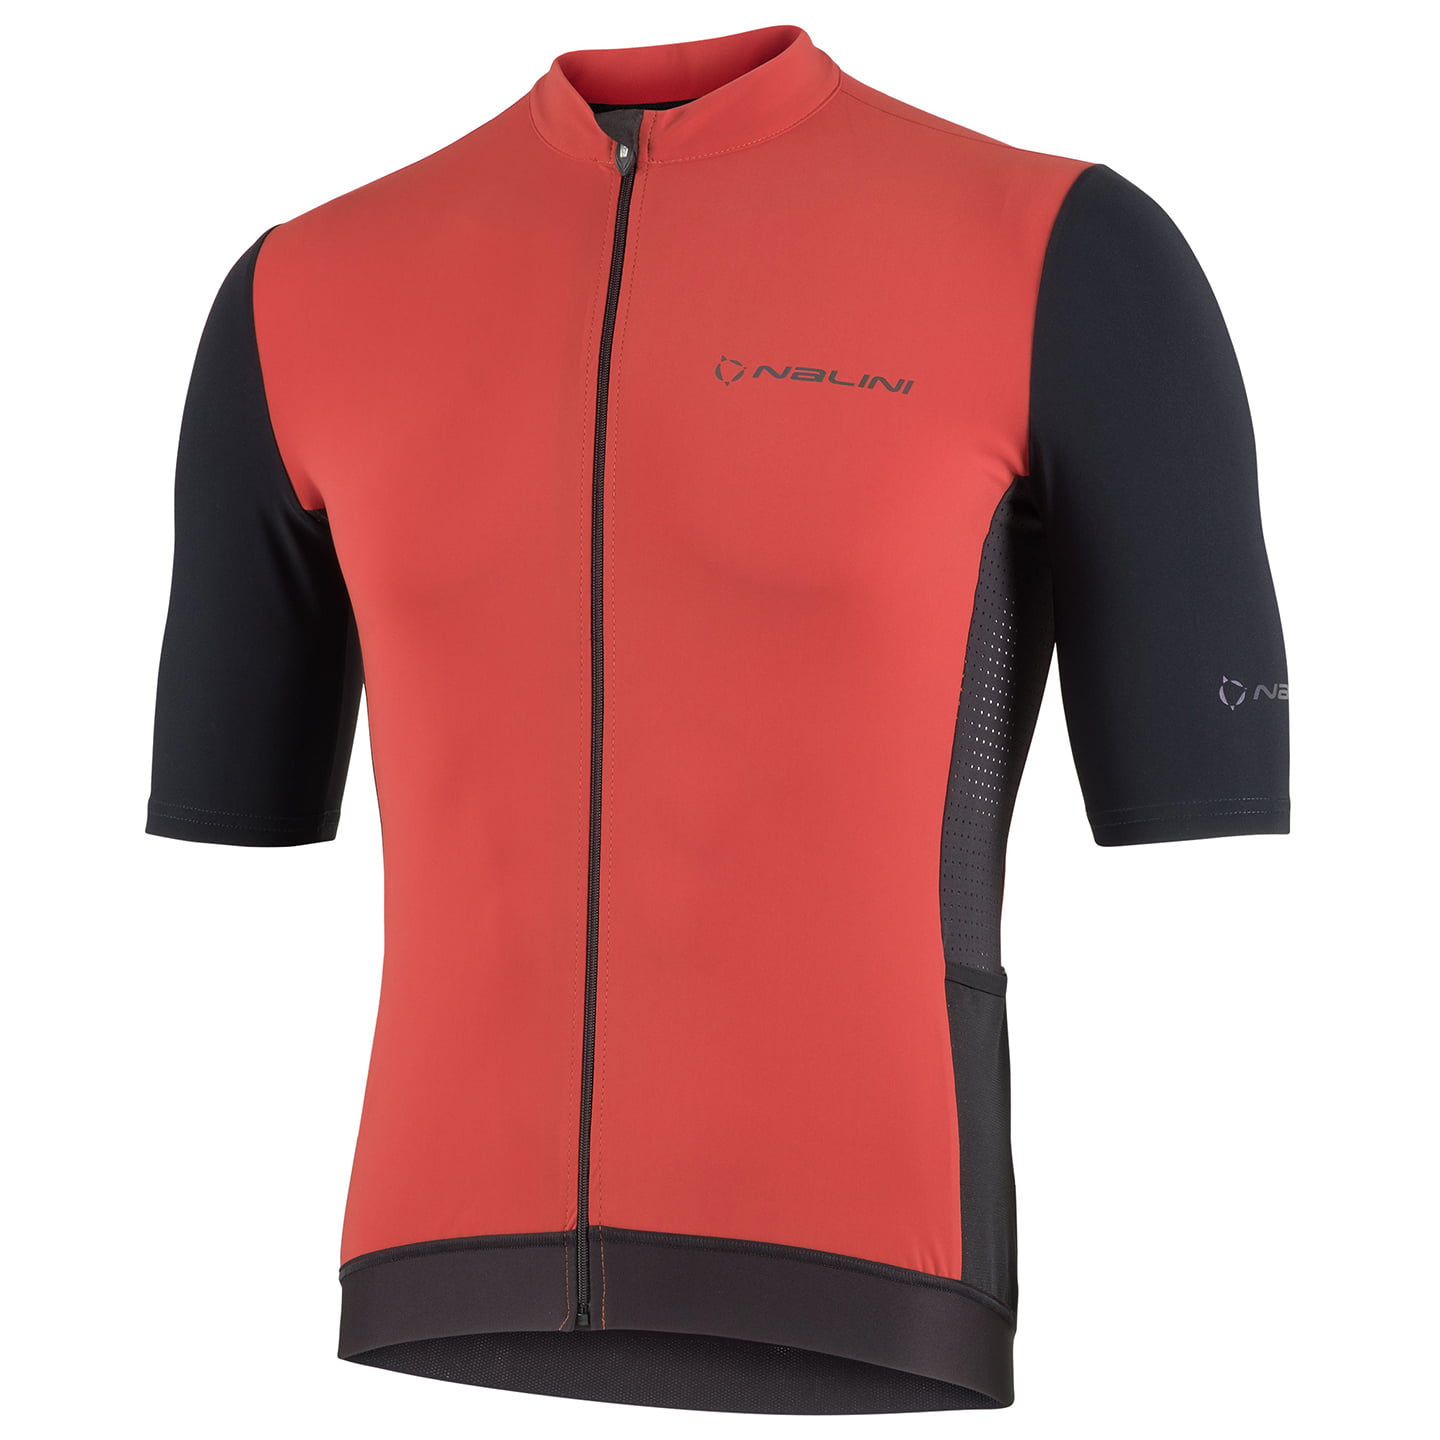 NALINI New Sun Block Short Sleeve Jersey Short Sleeve Jersey, for men, size XL, Cycling jersey, Cycle clothing